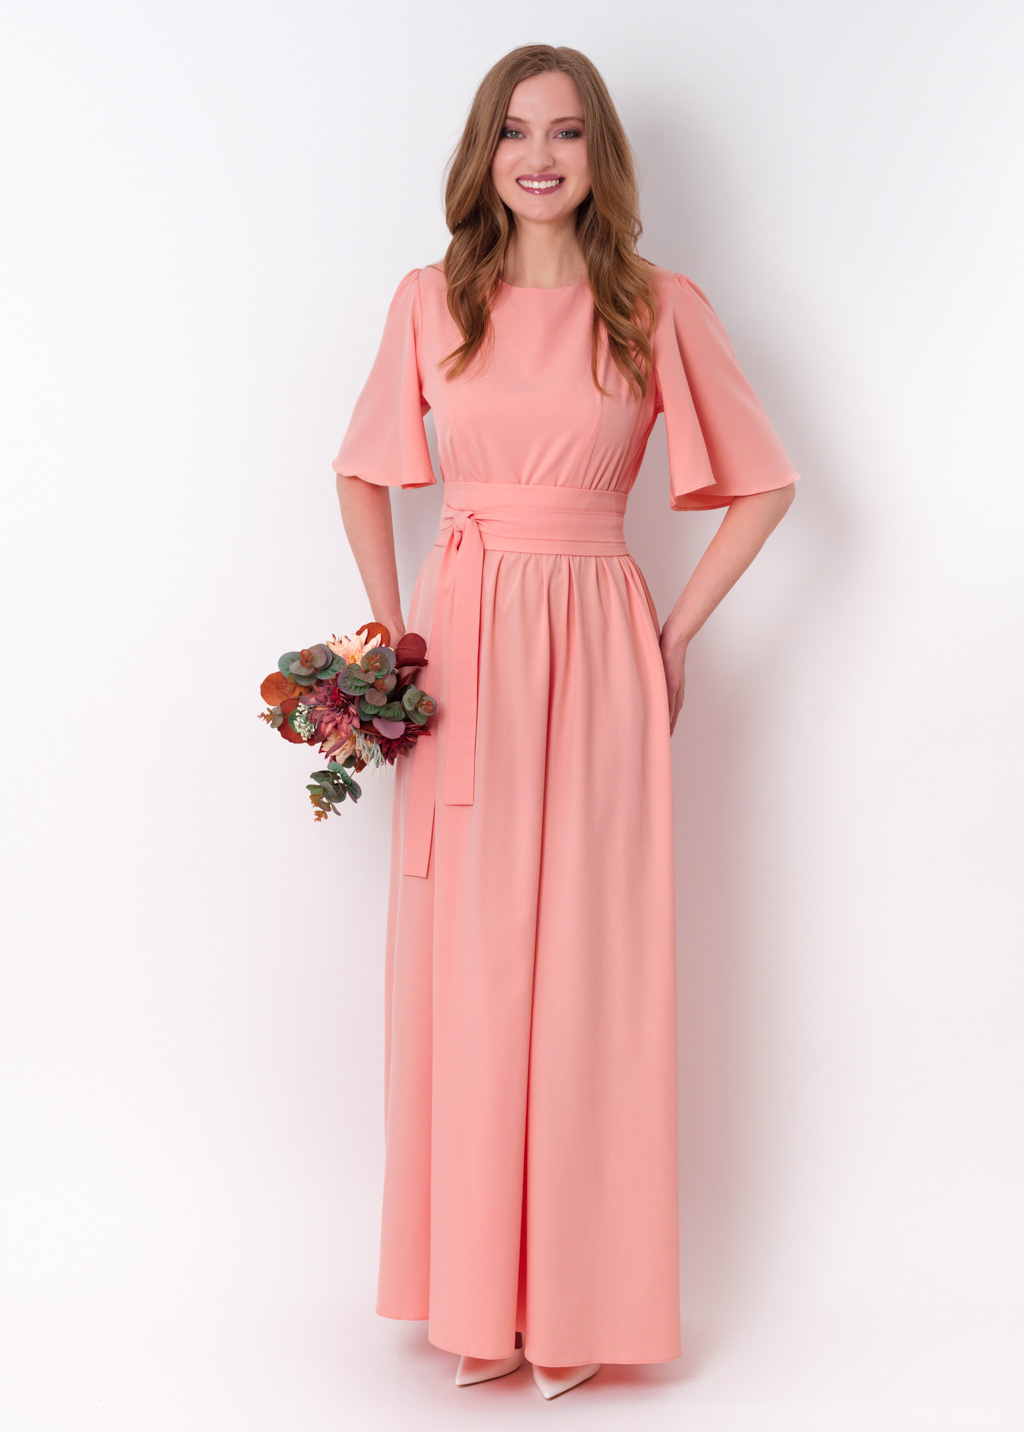 Blush pink long slit dress with belt